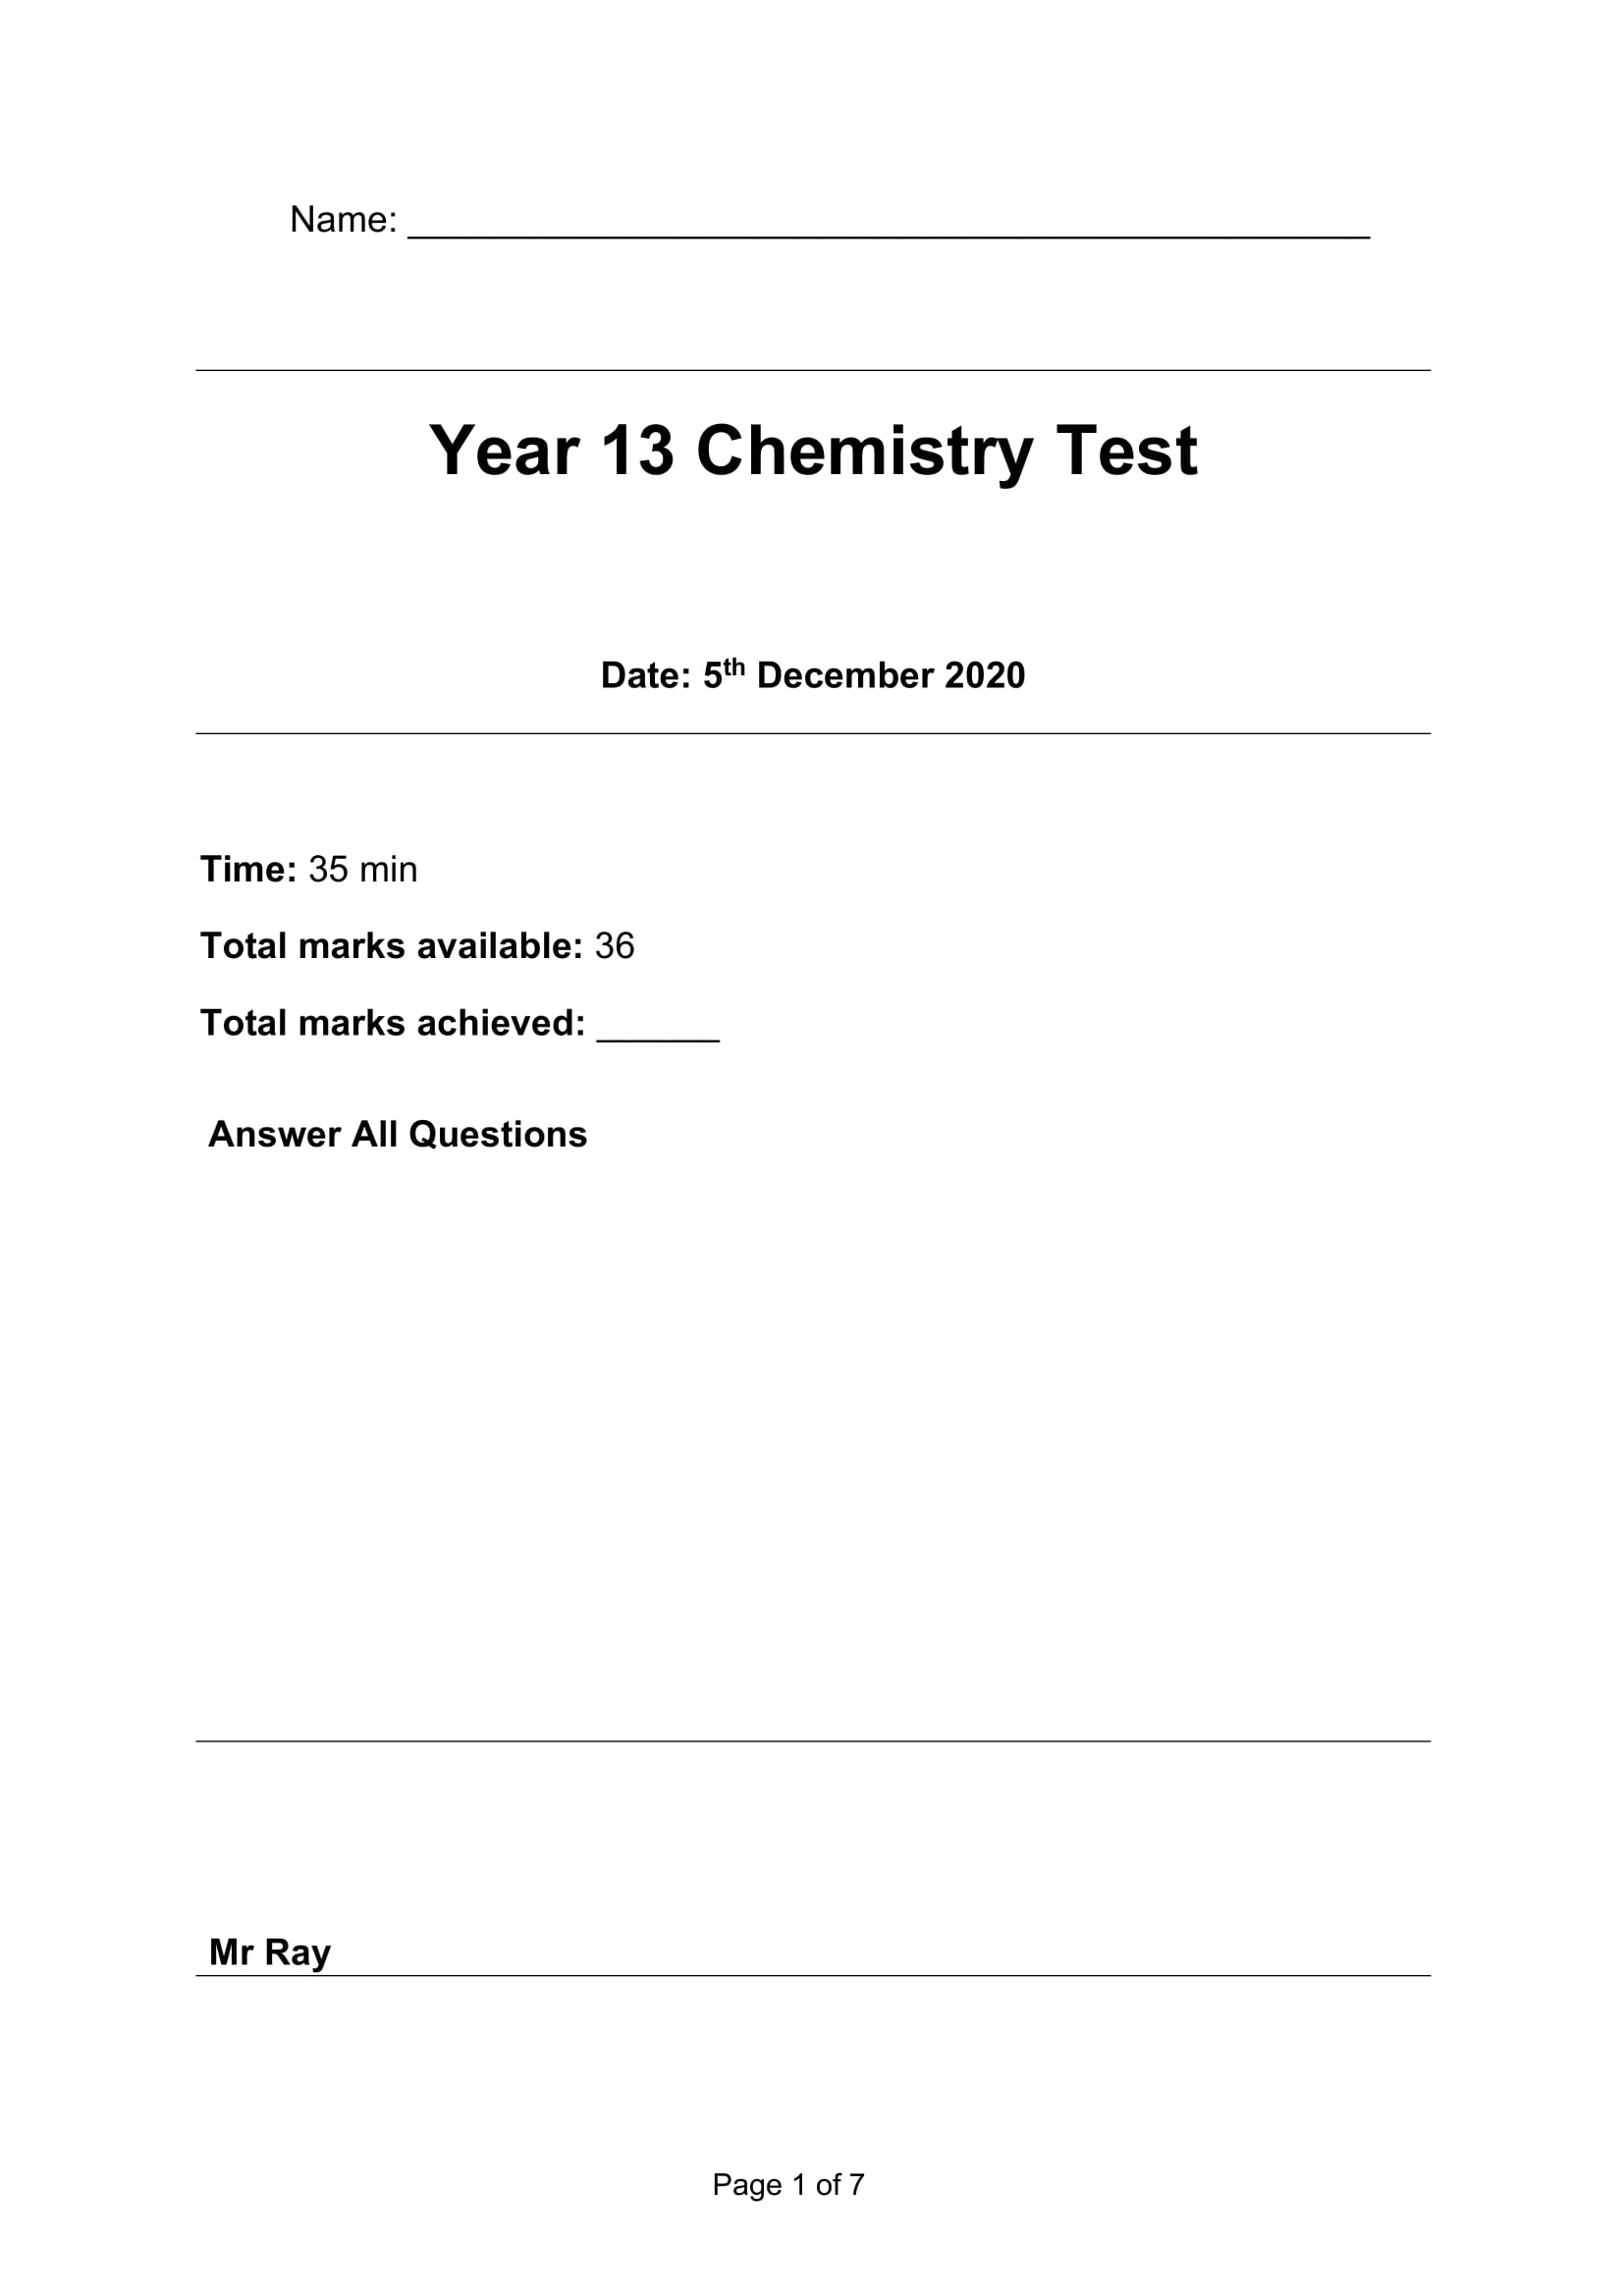 Year 13 Chemistry Test Dec 2020 QP-1